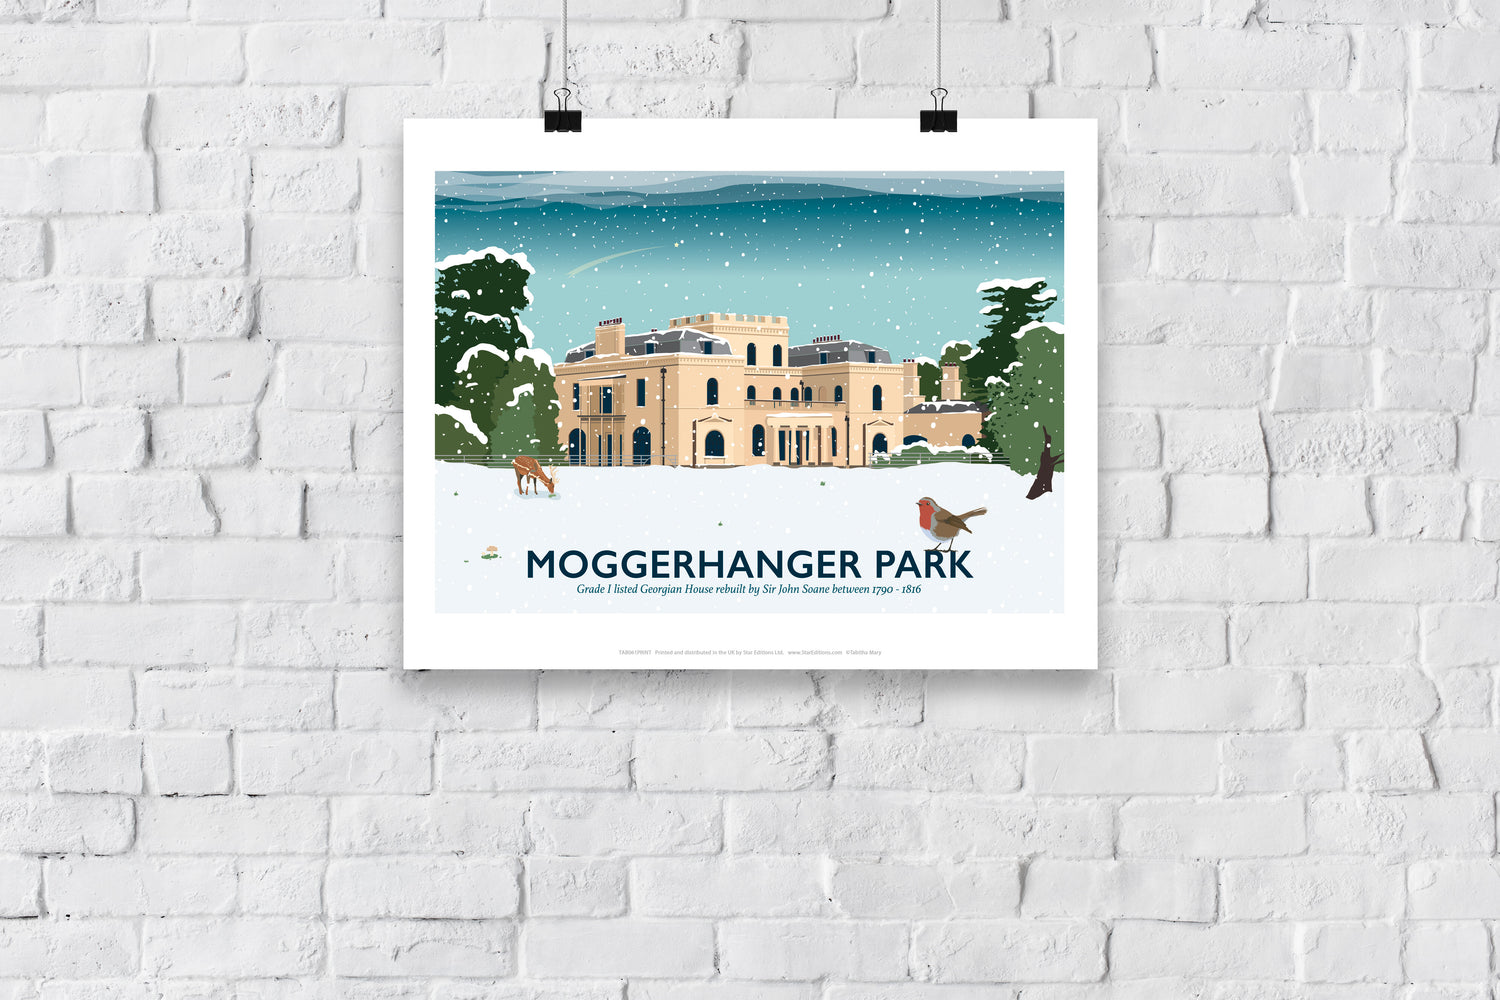 Moggerhanger Park, Sandy, Bedfordshire - Art Print